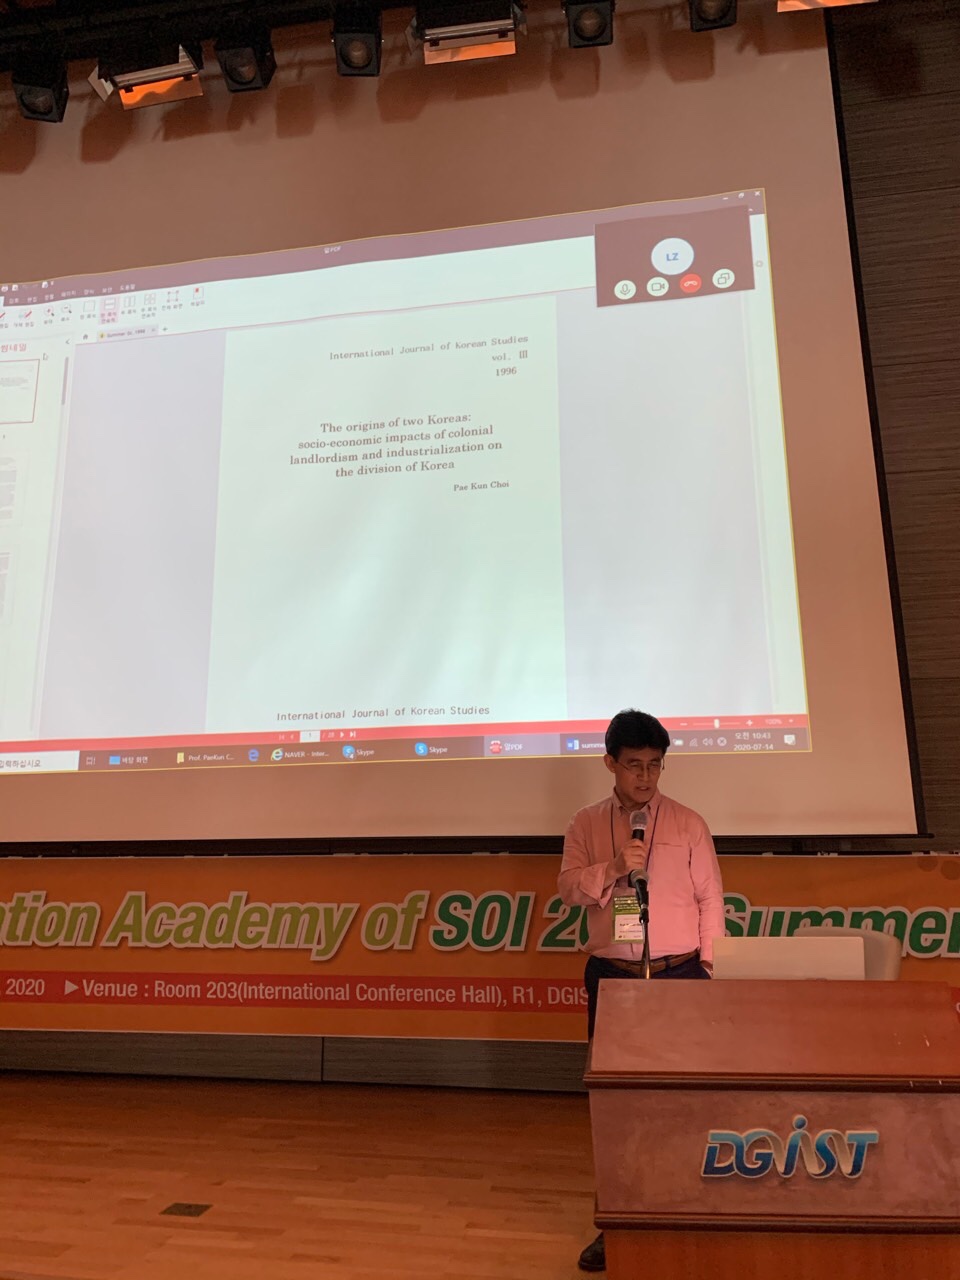 SOI Open Innovation Academy 2020 Summer School